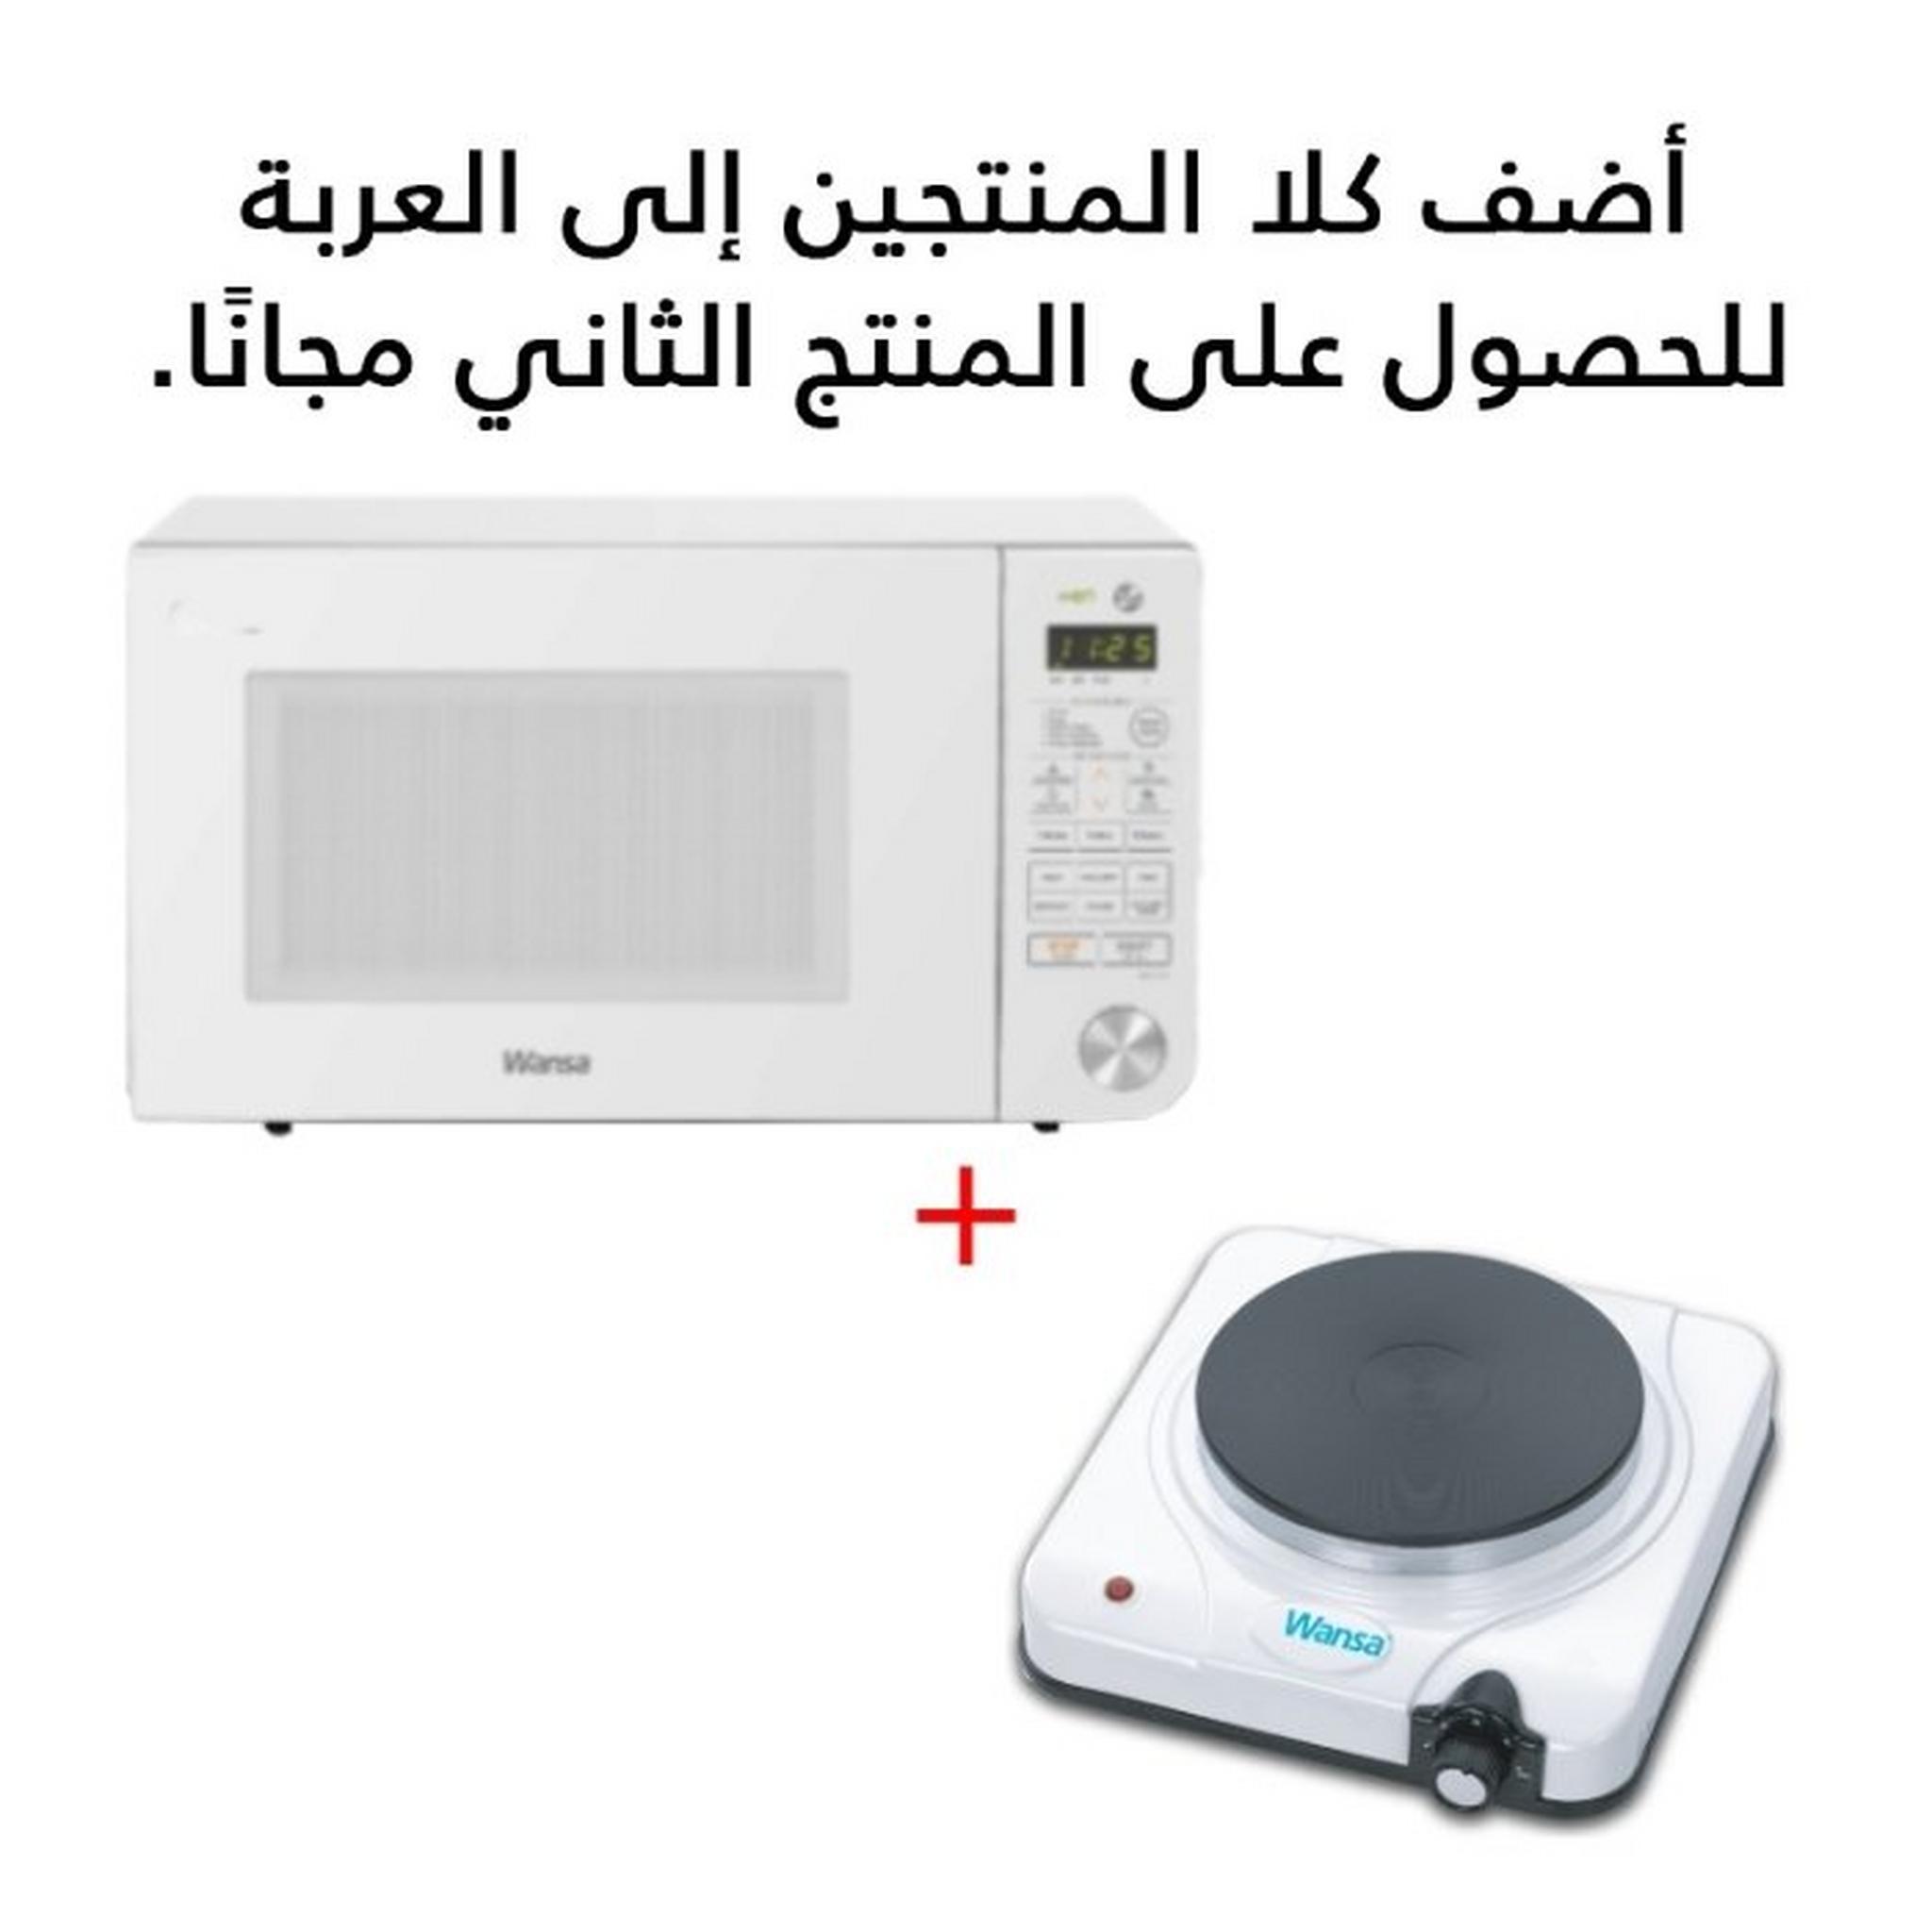 Wansa MR-5002 Microwave 31 Liters 1000Watts - White